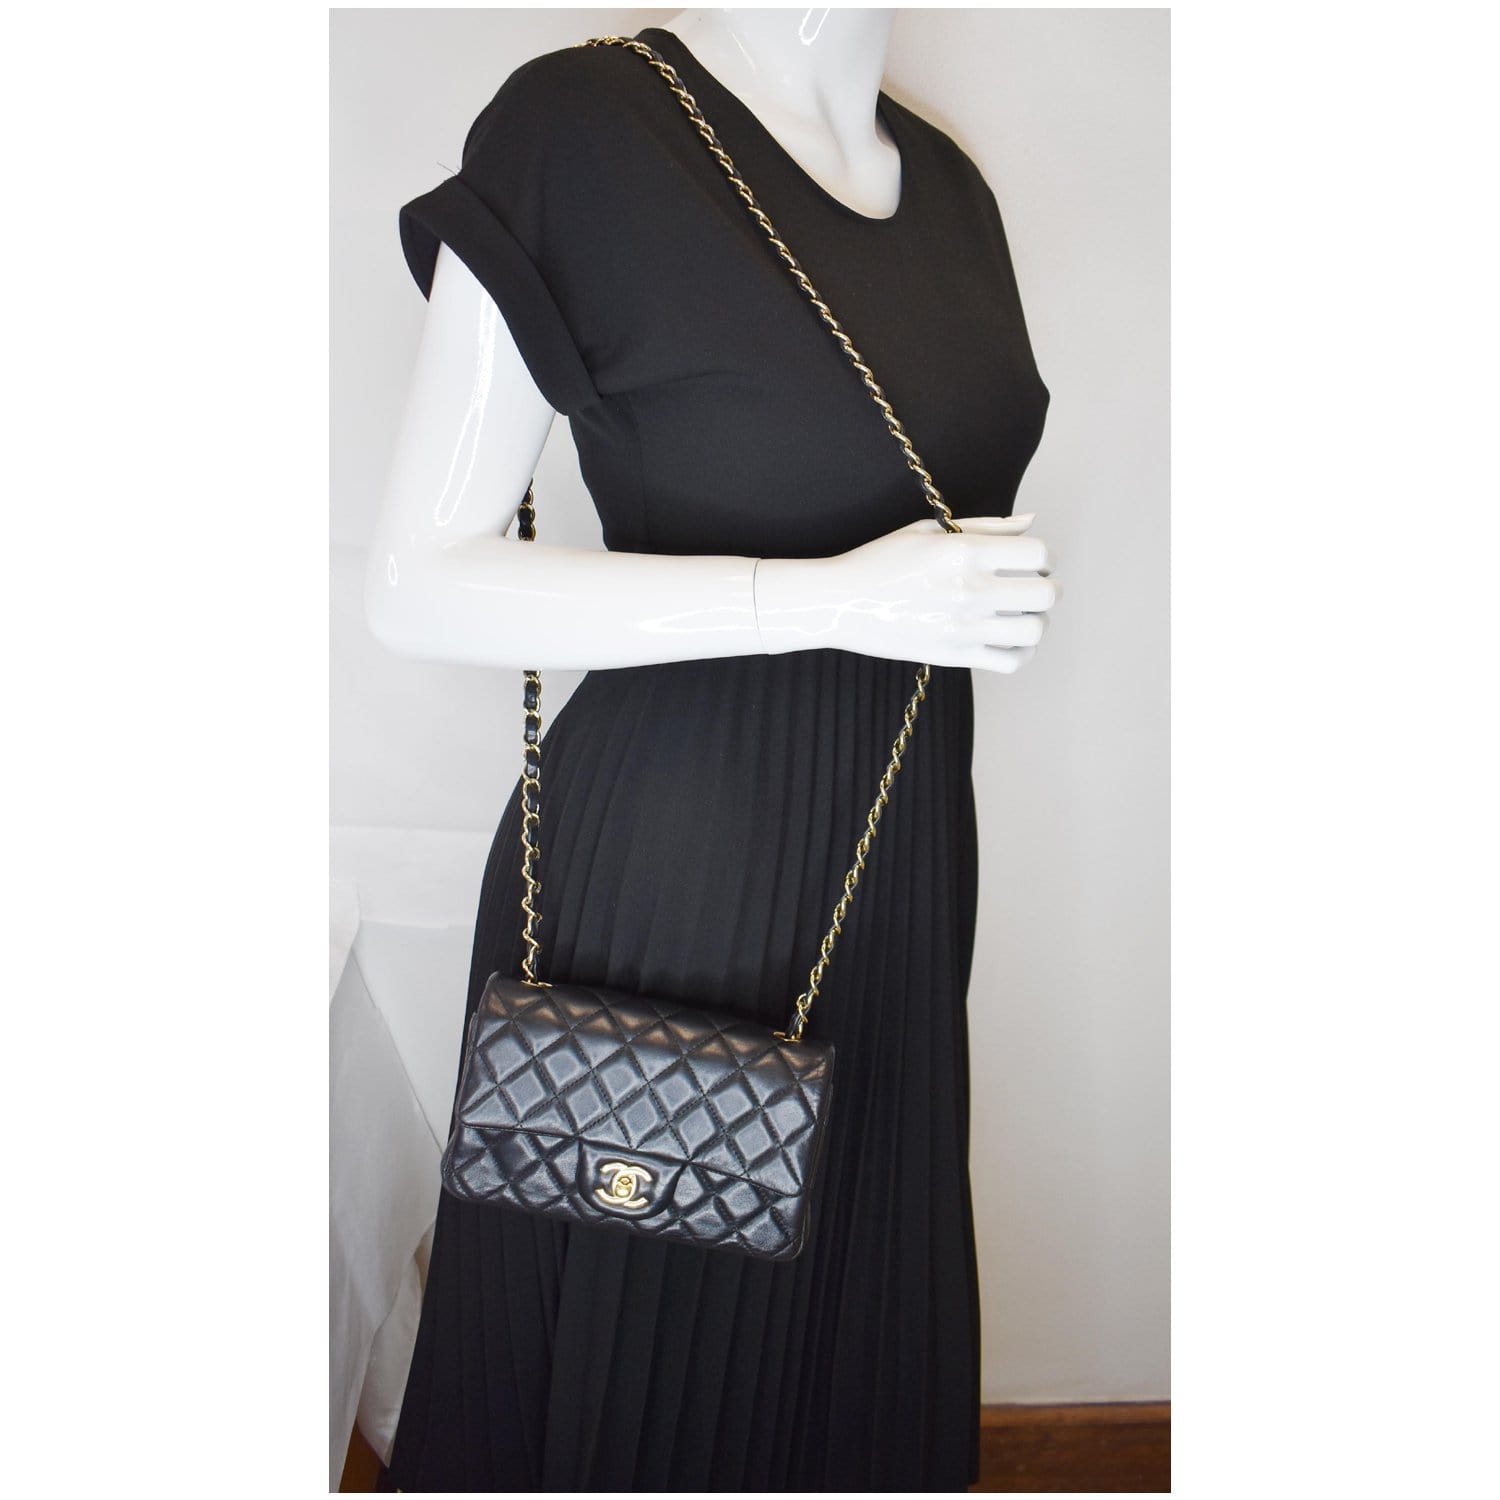 Chanel Classic Flap Shoulder Bag, Black Lambskin, Mini